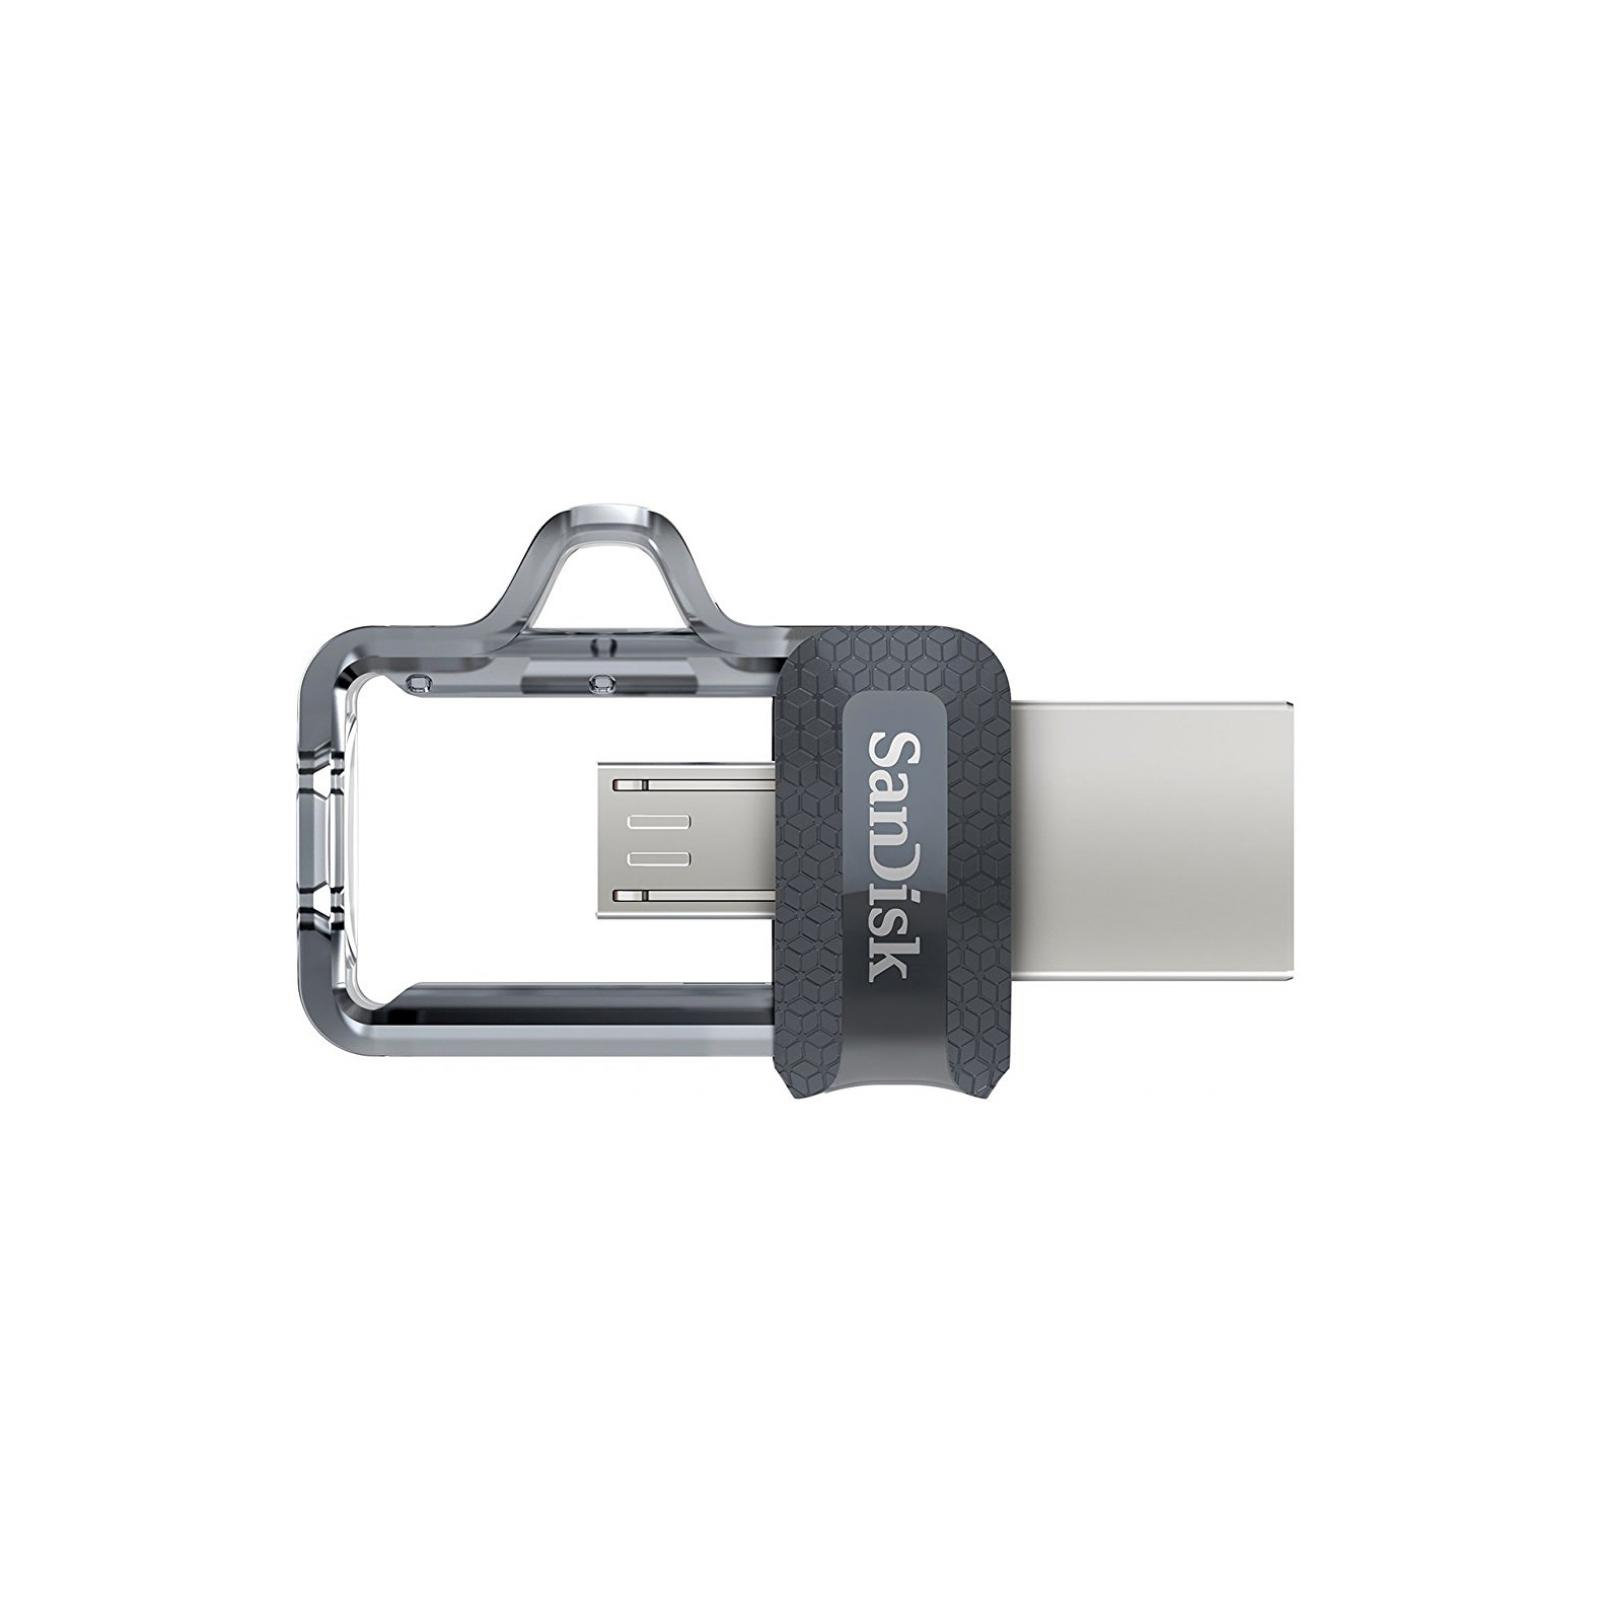 USB флеш накопитель SanDisk 16GB Ultra Dual Black USB 3.0 OTG (SDDD3-016G-G46) изображение 3